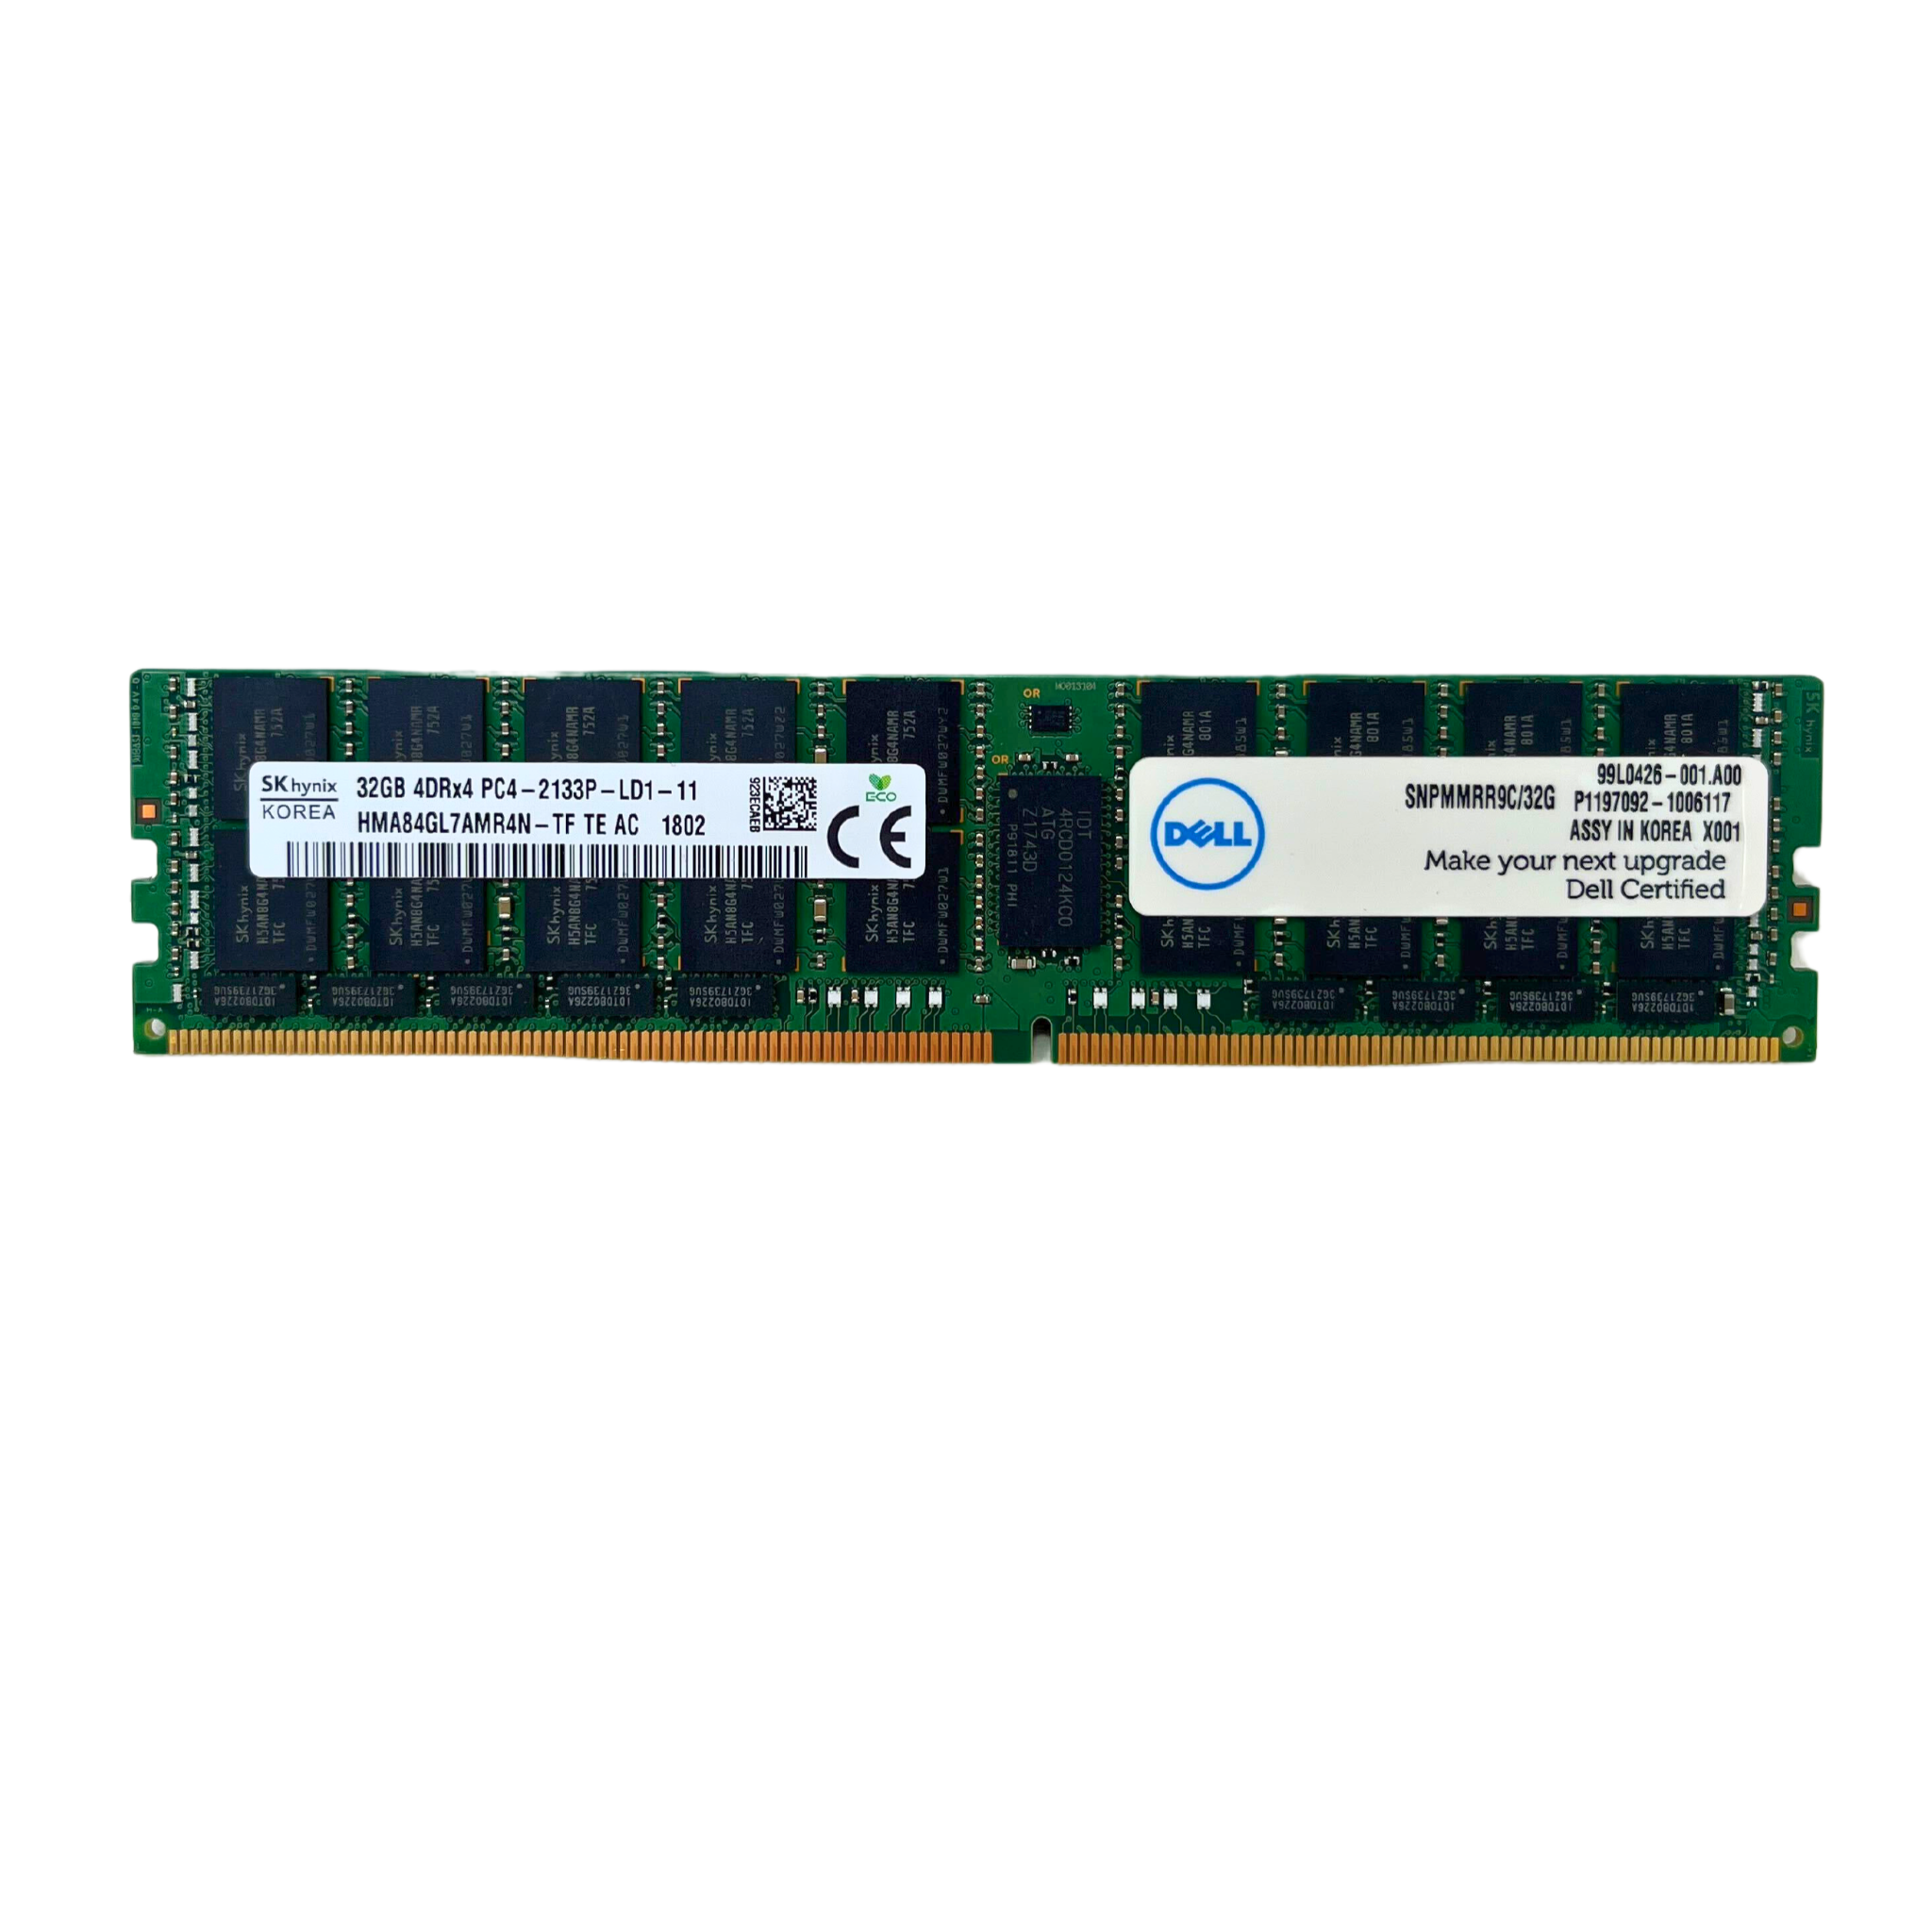 Dell 32GB 4DRx4 PC4-2133P-L DDR4 LRDIMM ECC Registered Memory (MTA36ASF4G72PZ-2G1 - 3rdParty)